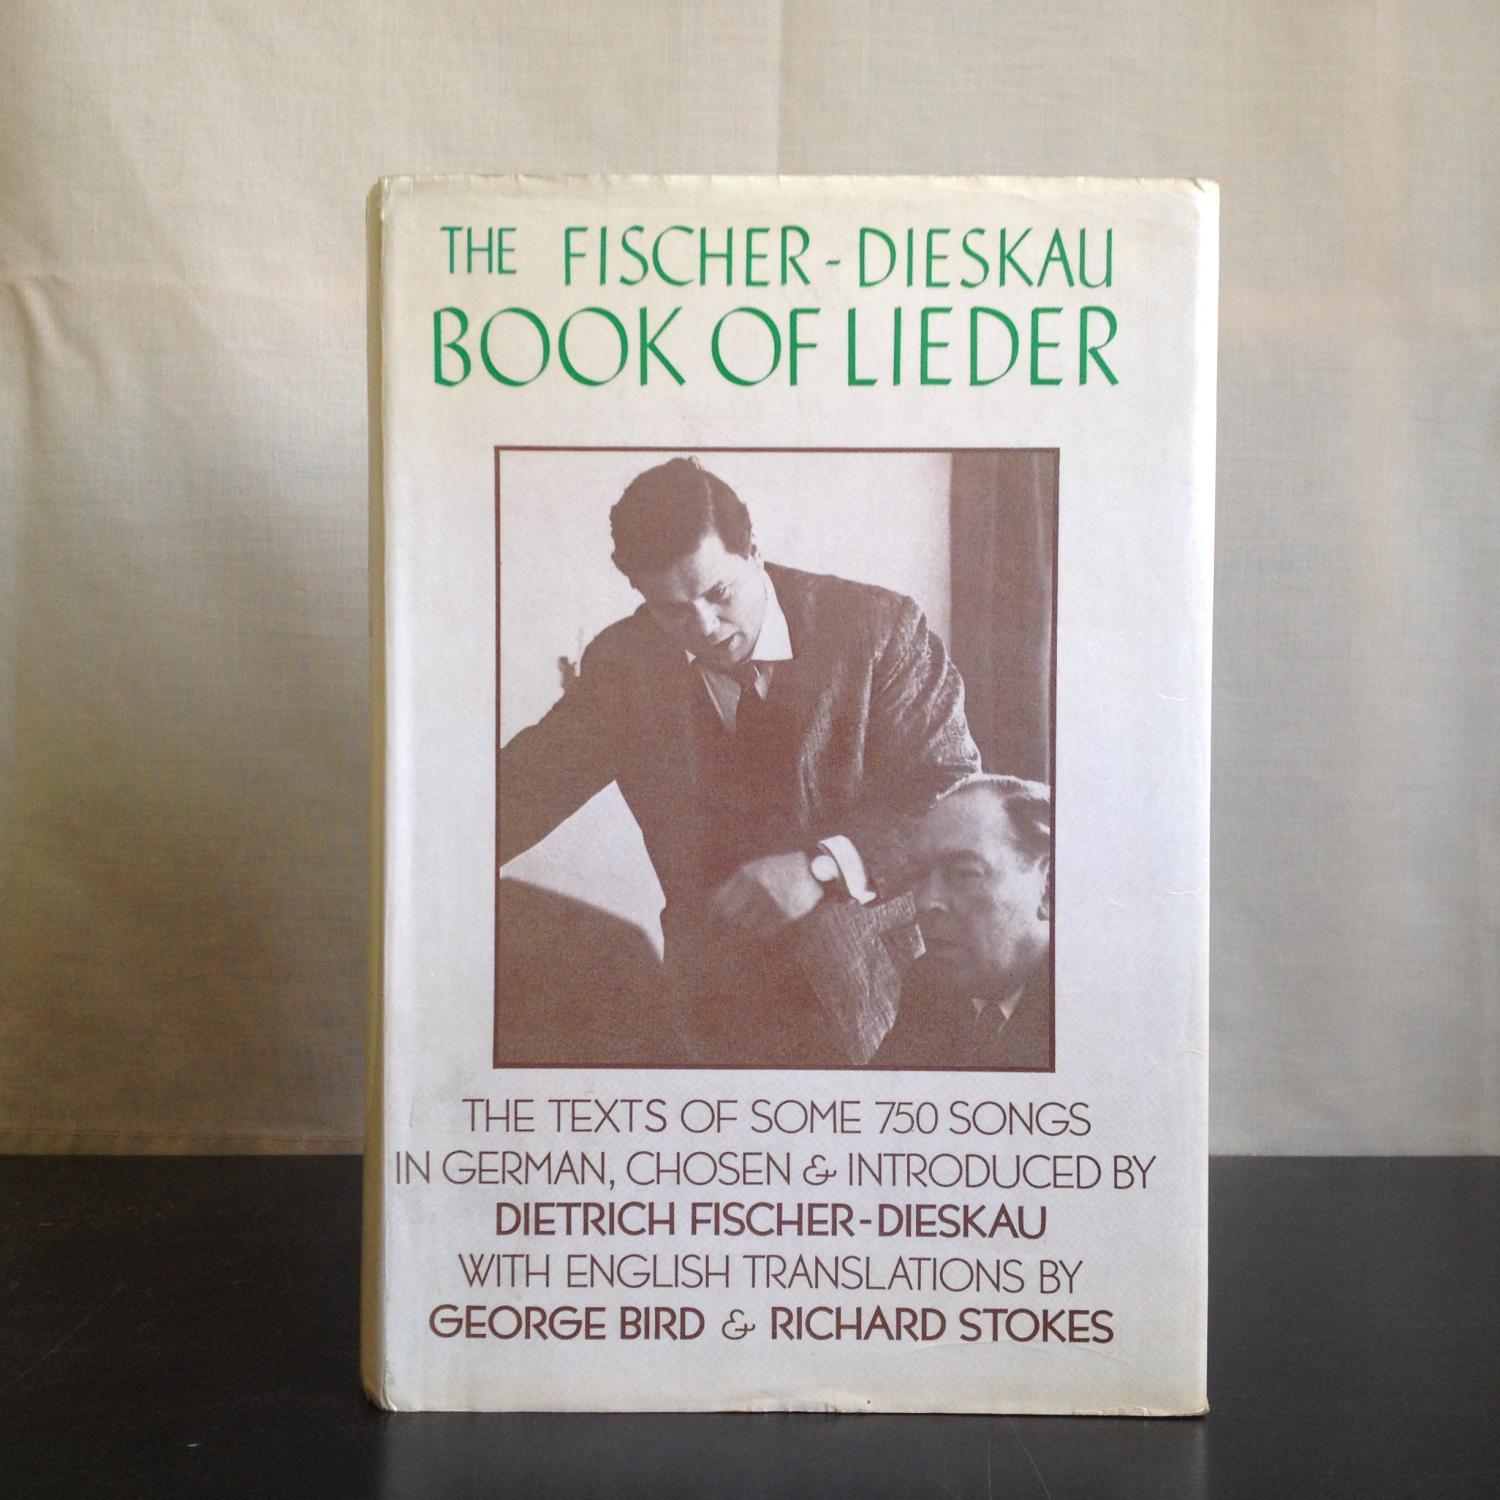 The Book of Lieder